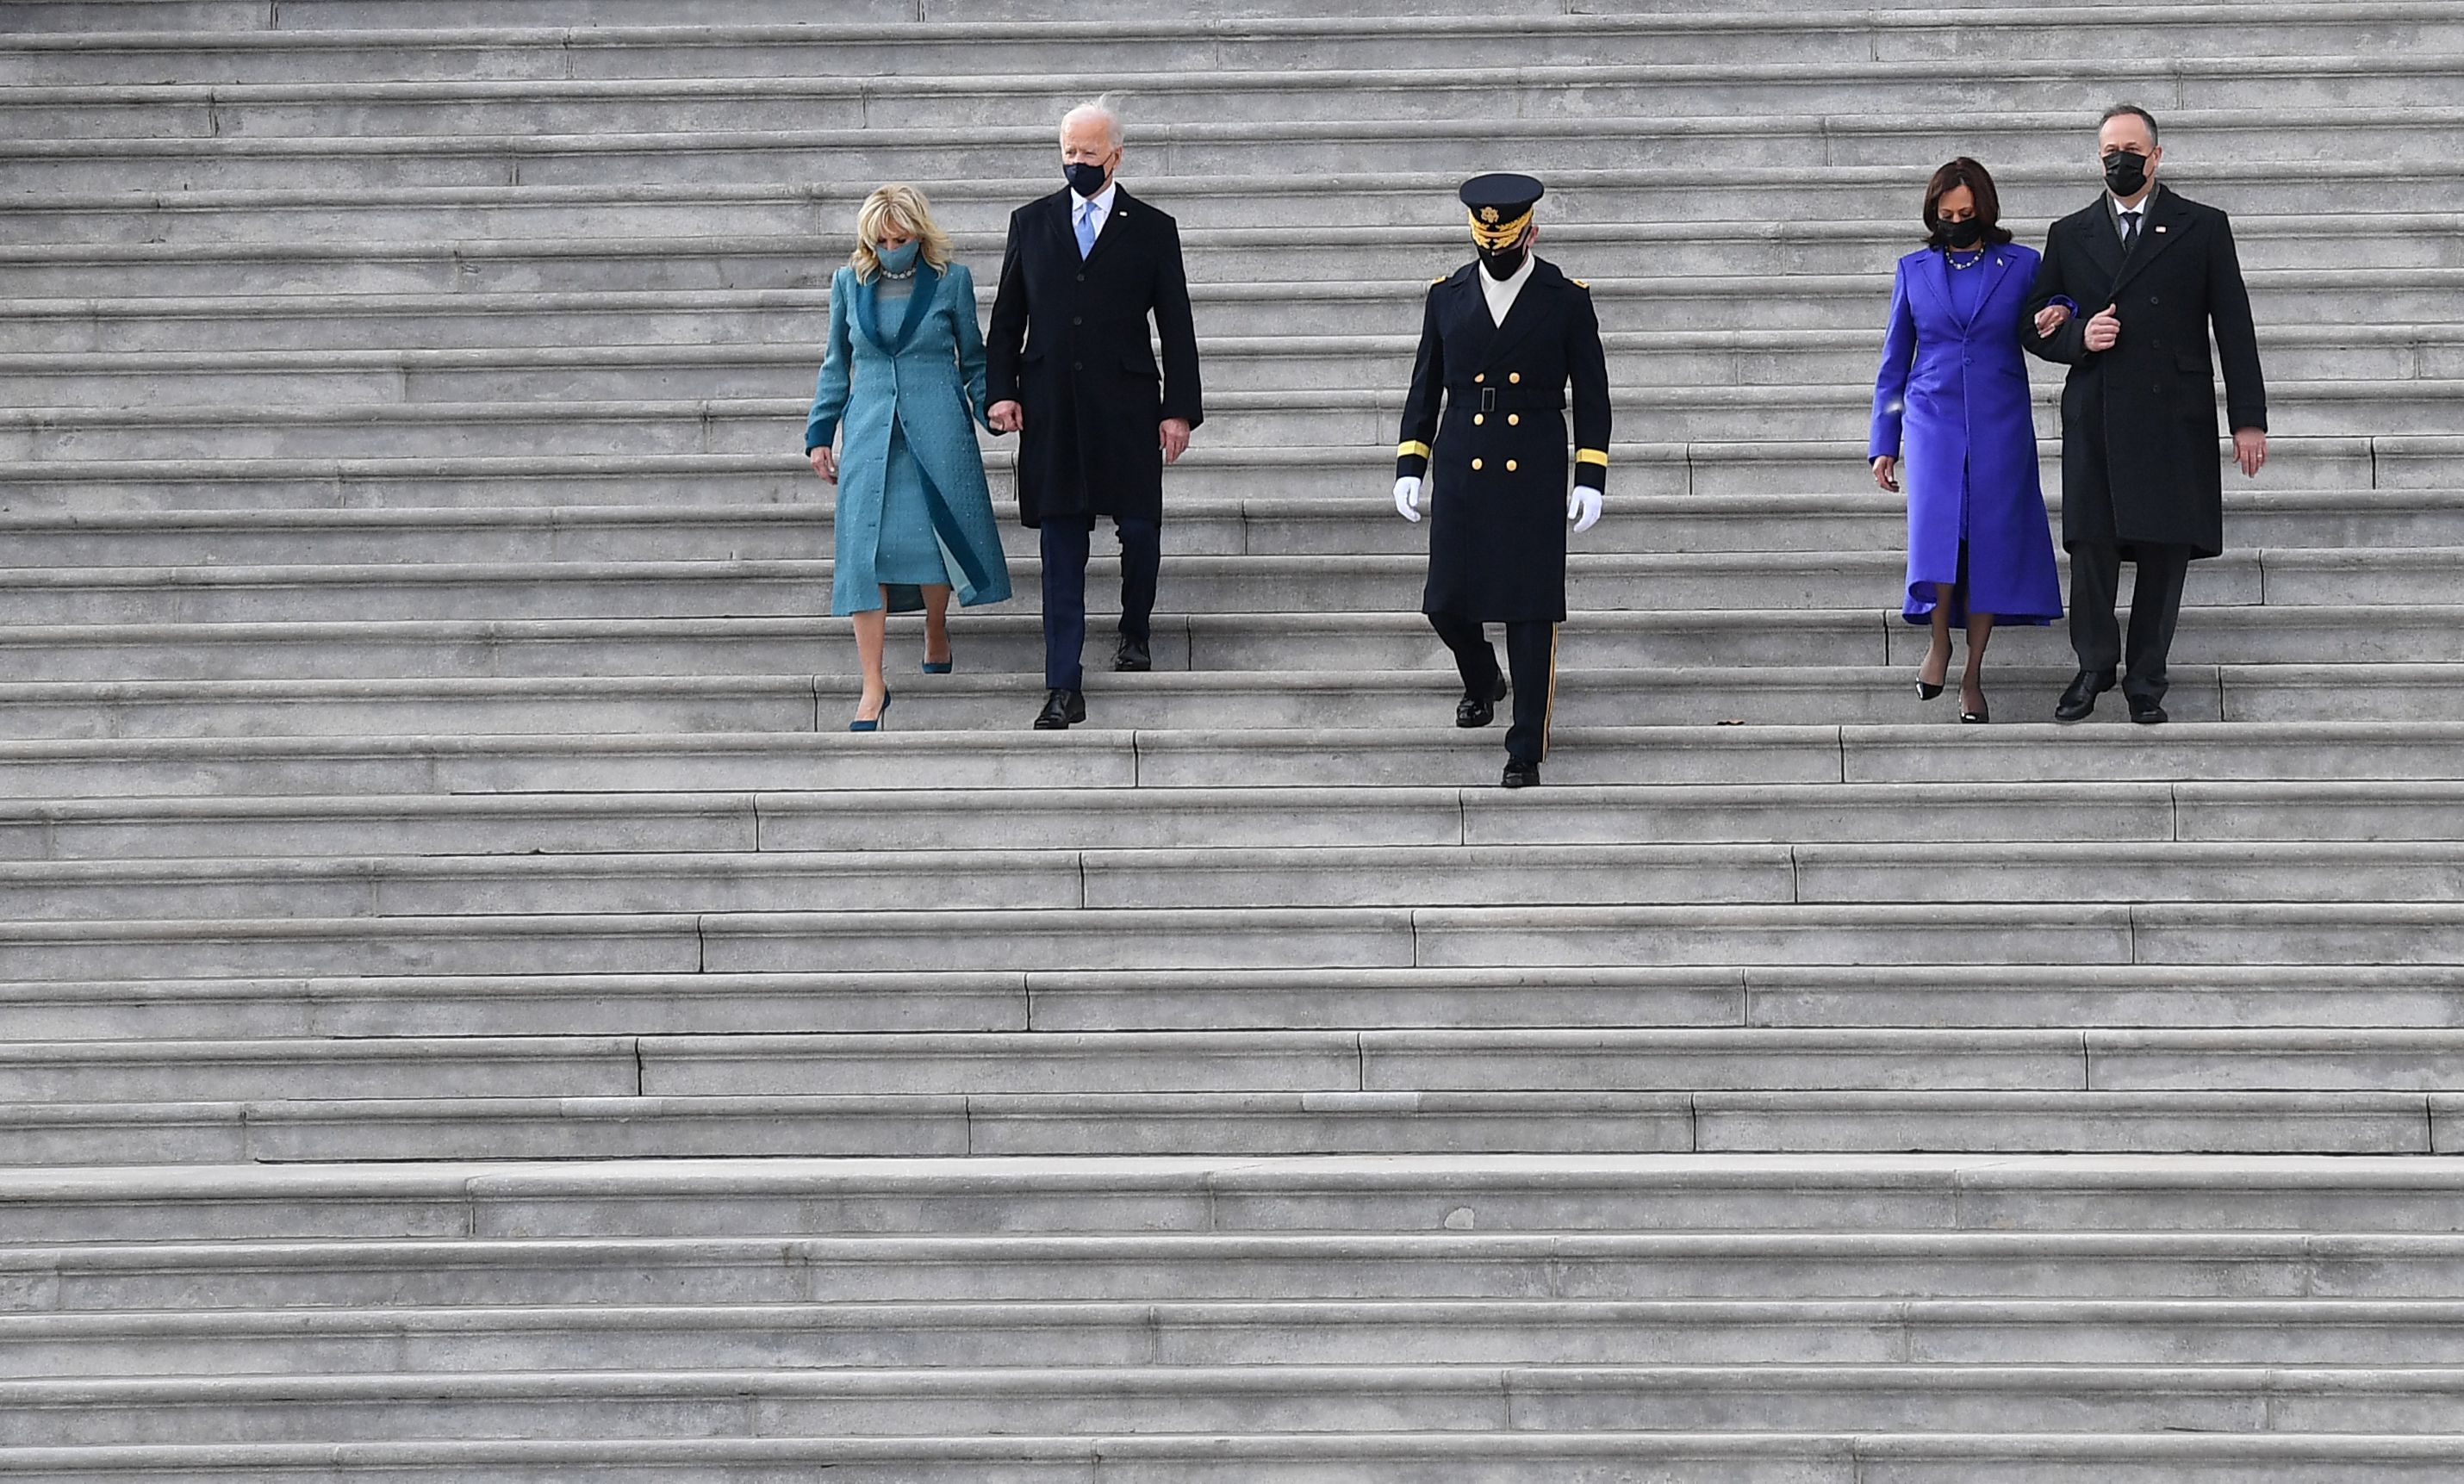 Photo of Joe Biden, Jill Biden, Kamala Harris and Doug Emhoff walking down the stairs with a soldier